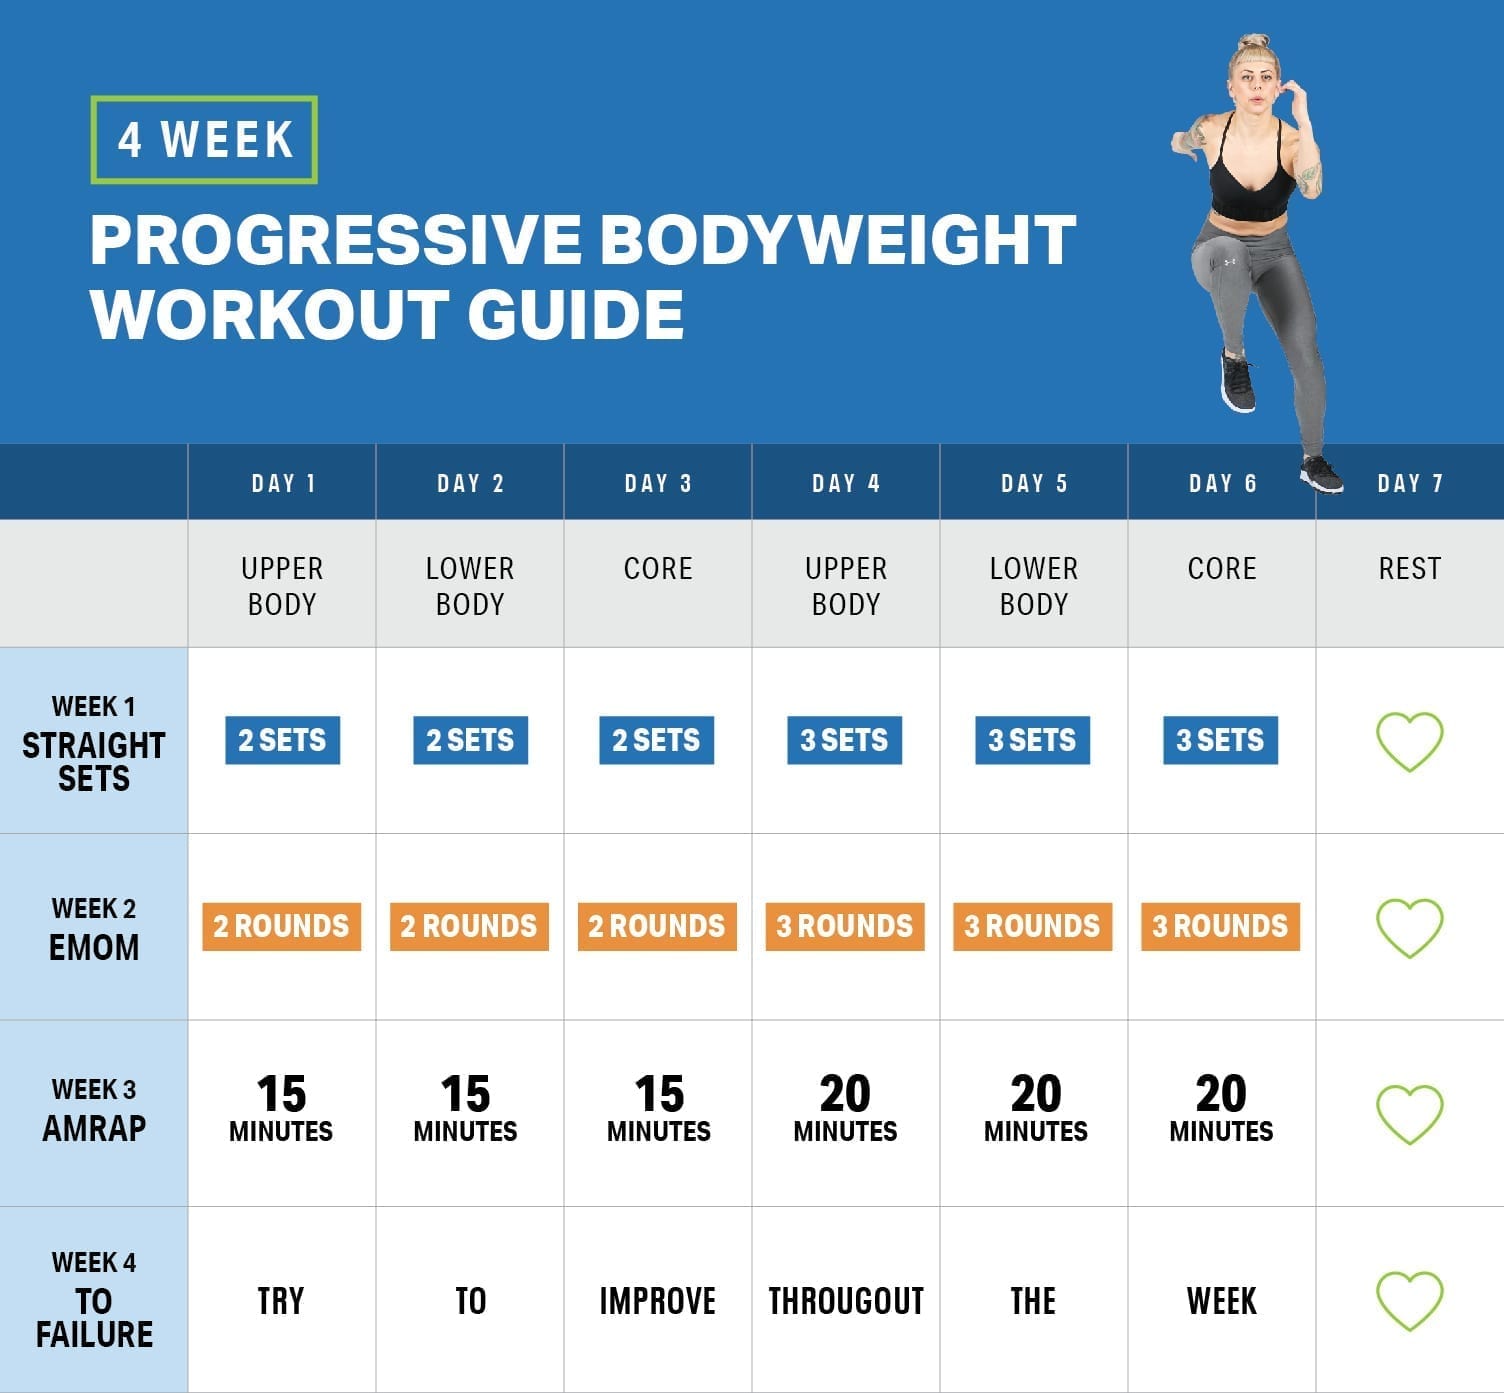 https://blog.myfitnesspal.com/wp-content/uploads/2020/06/UACF-4-Week-Progressive-Bodyweight-Workout-01.jpg